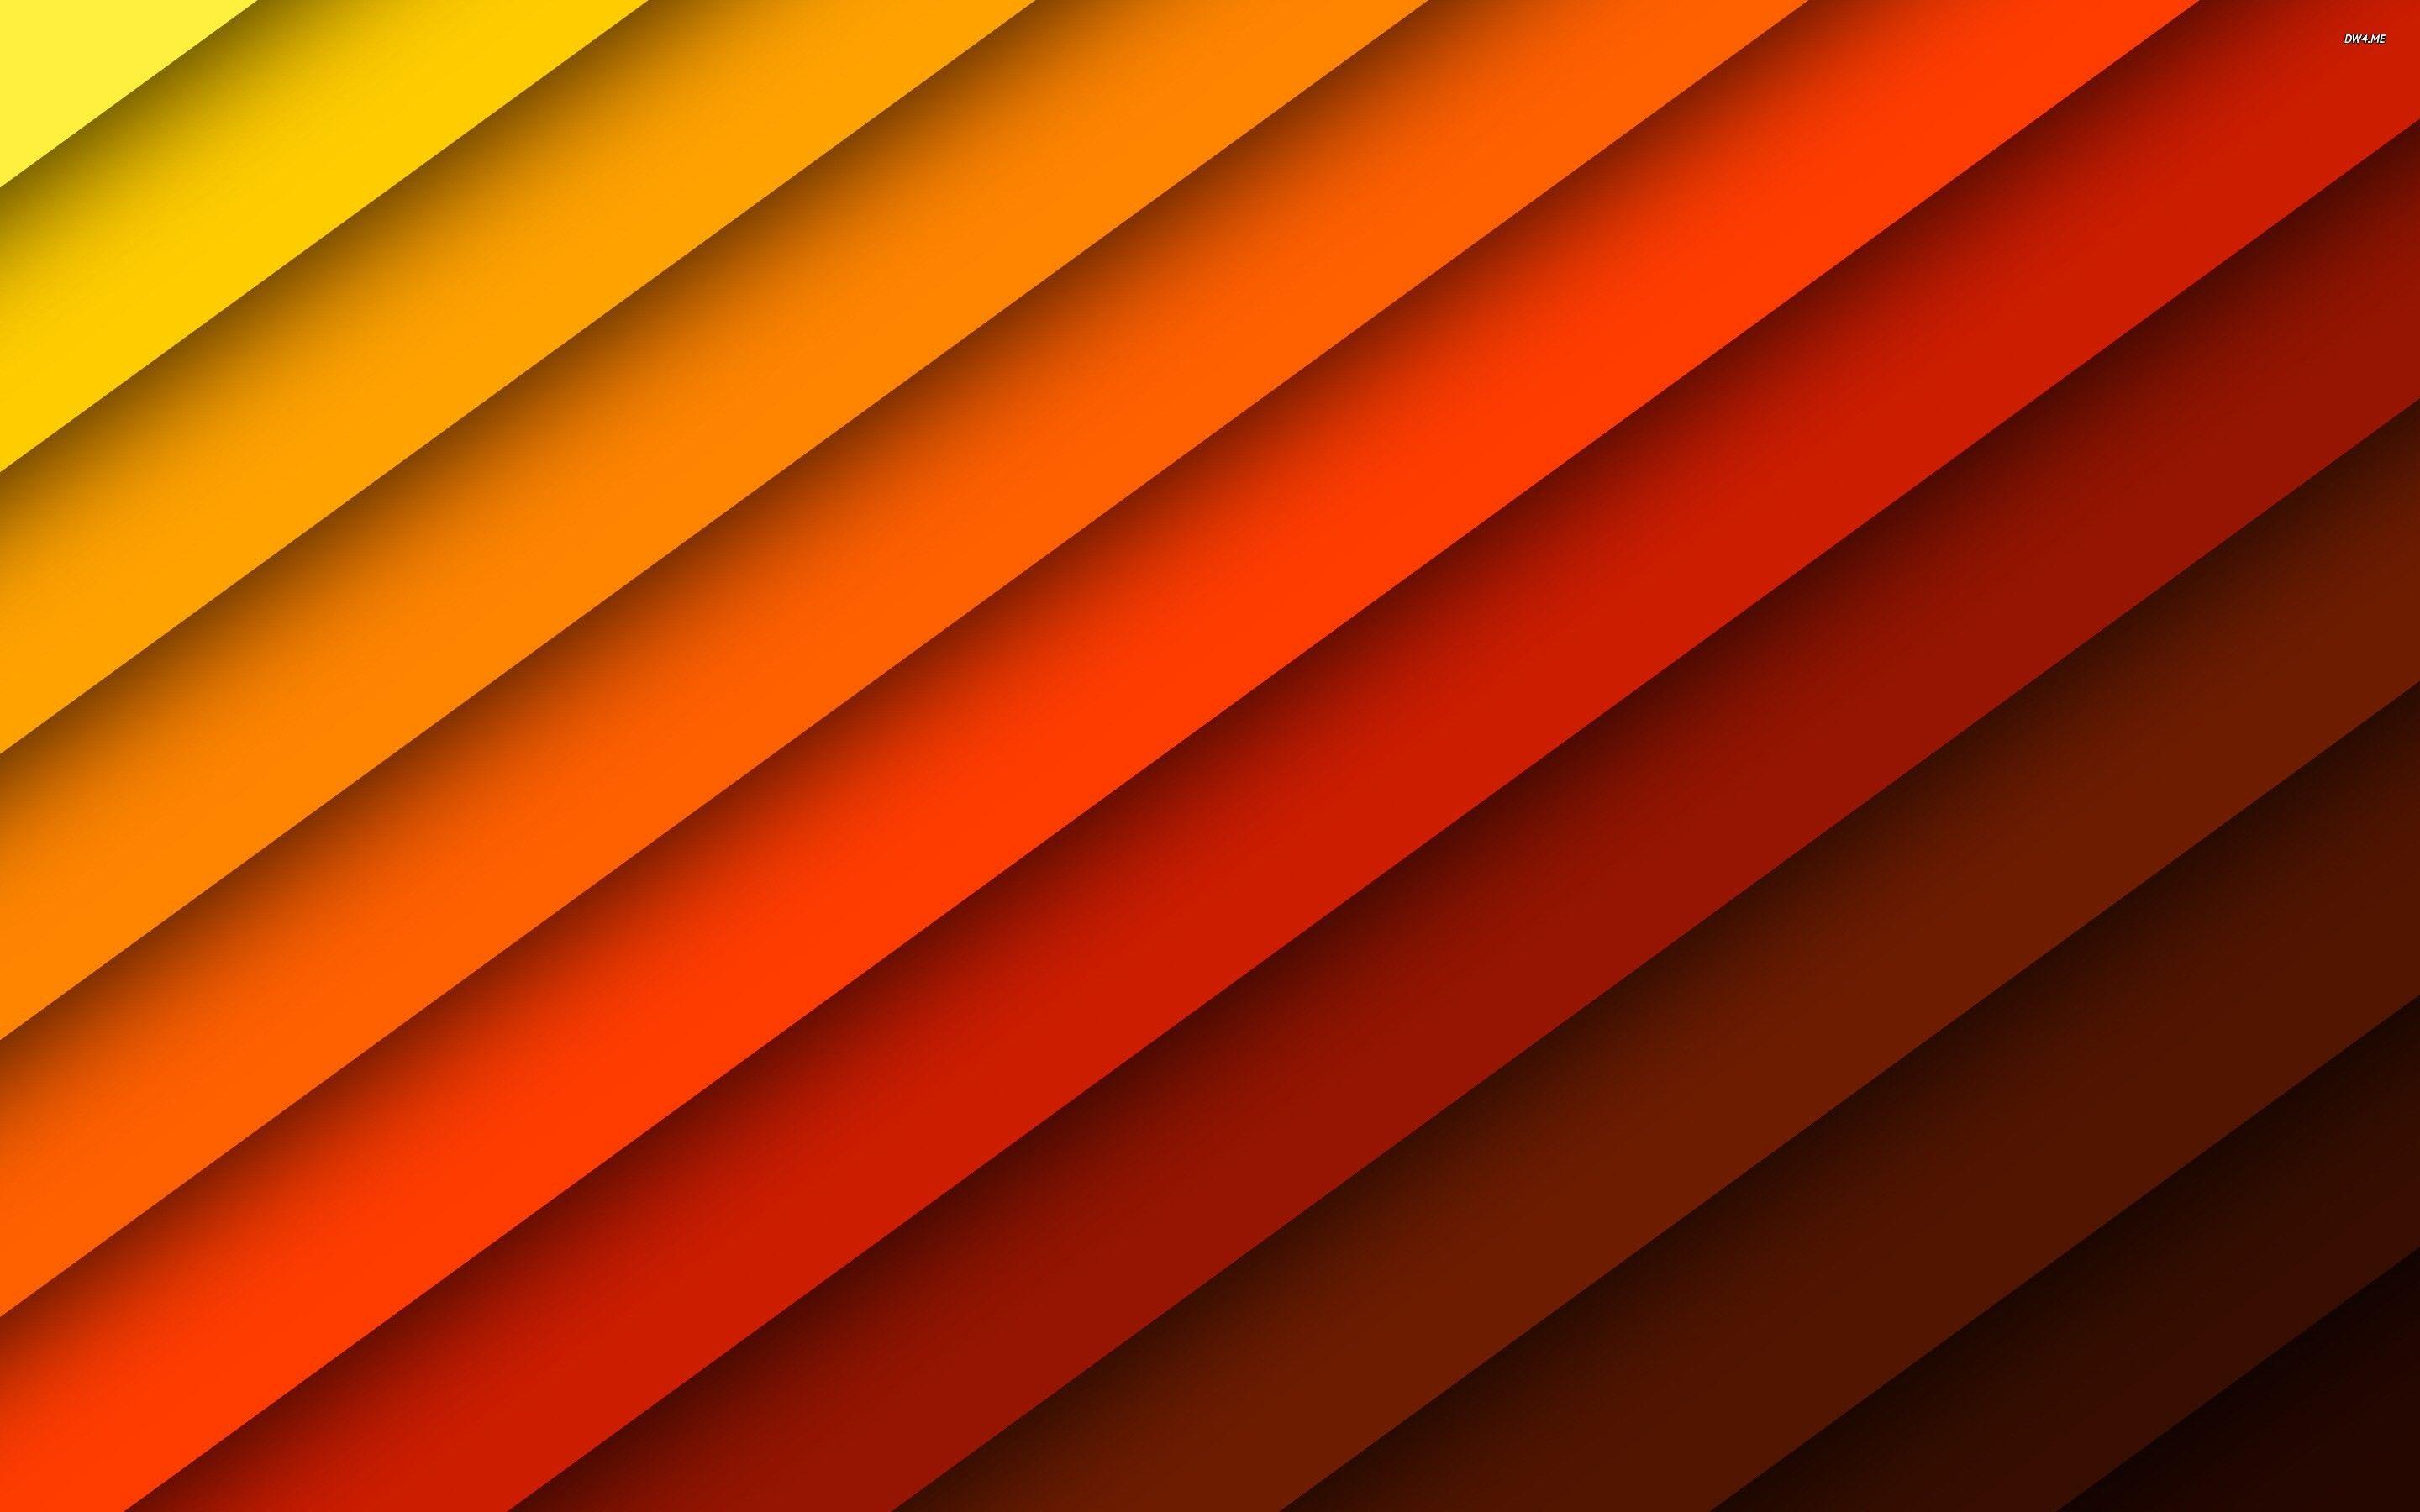 Burnt Orange Wallpapers - Top Free Burnt Orange Backgrounds